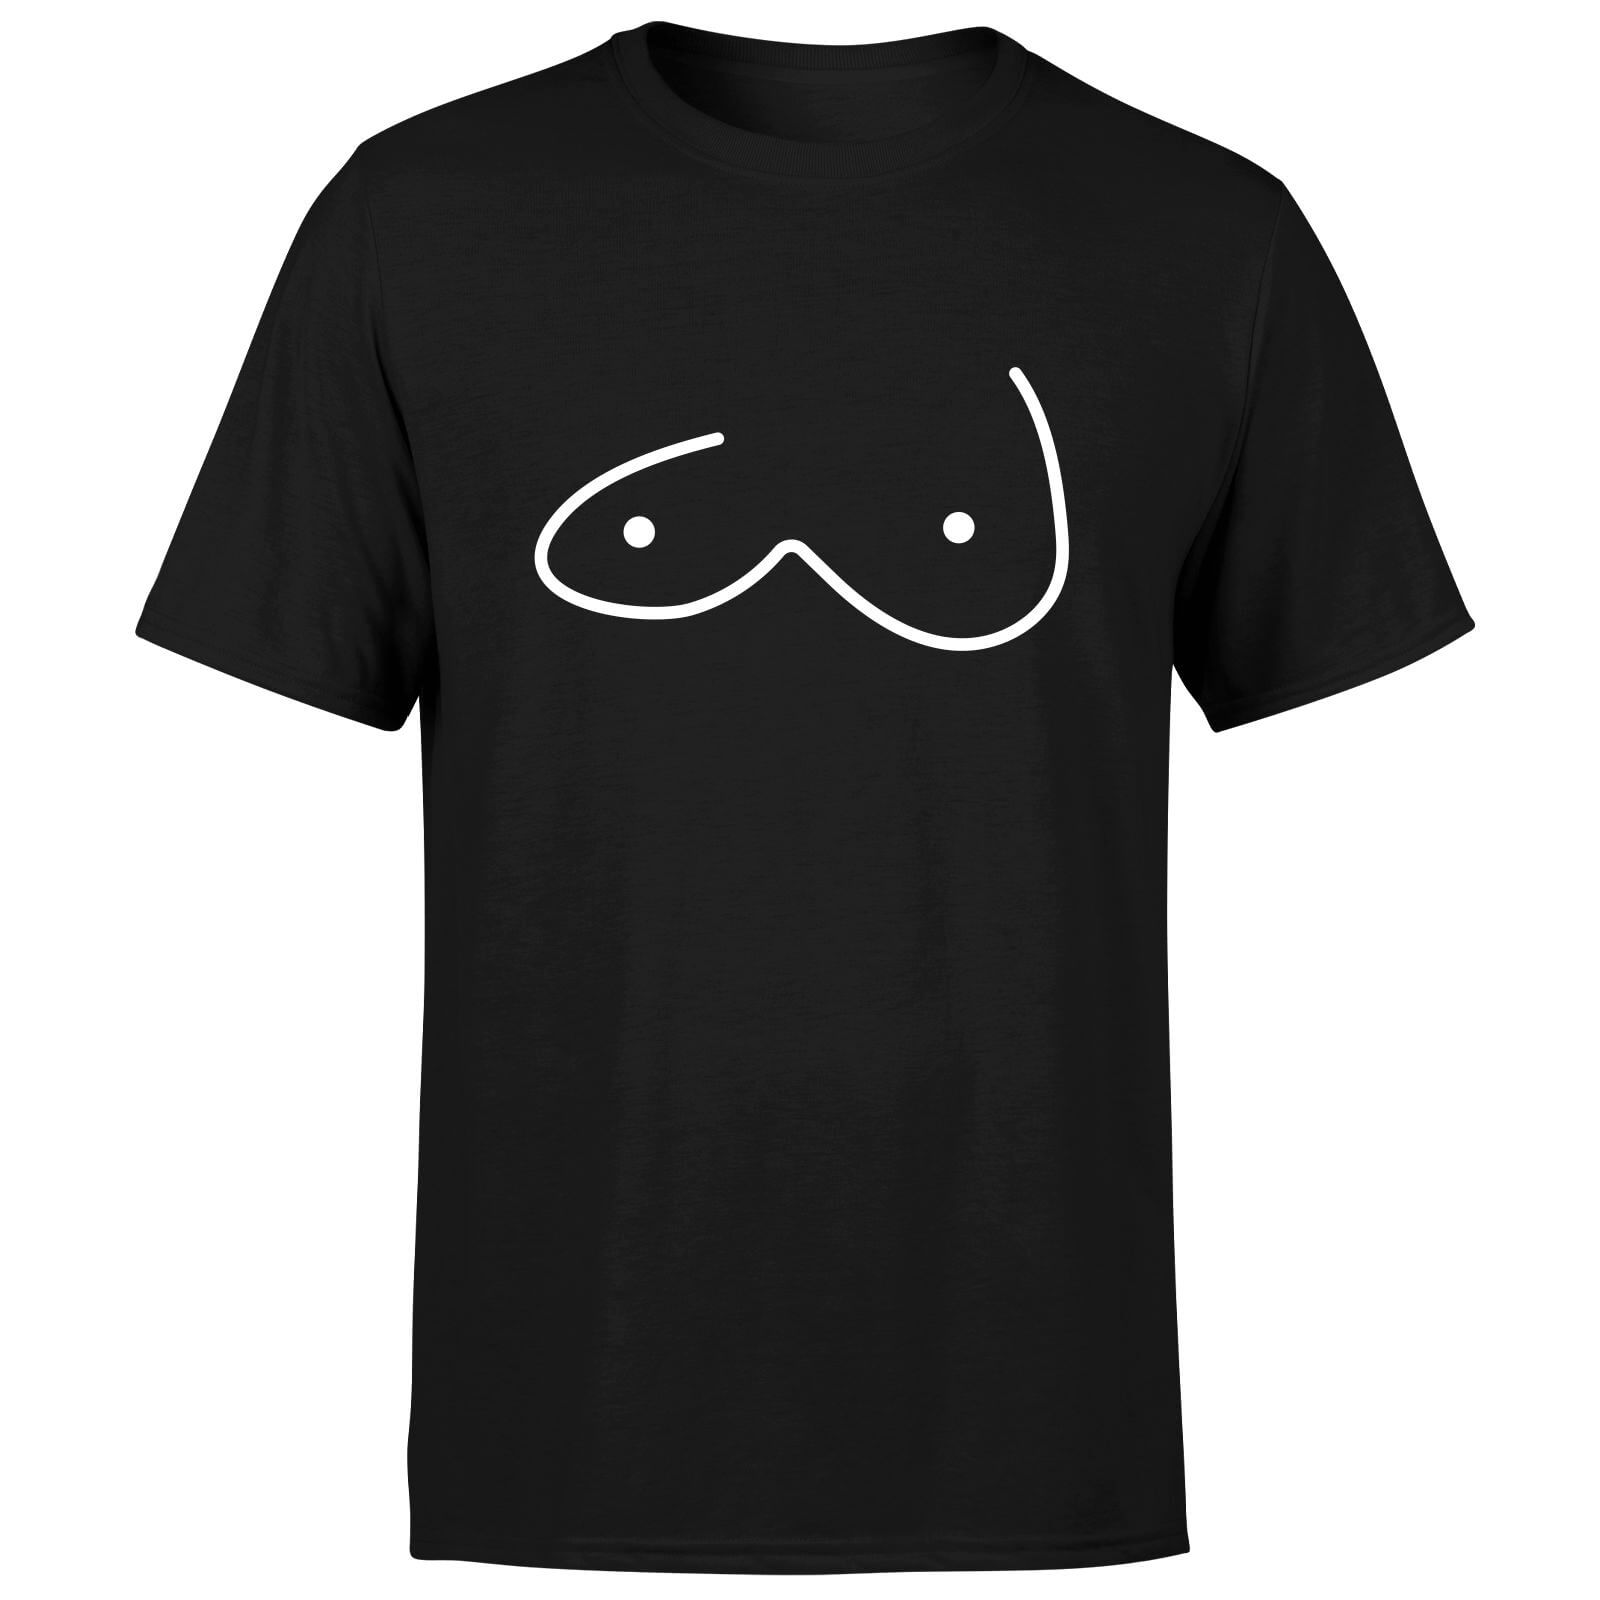 Wonkey Breasts Men's T-Shirt - Black - XS - Black